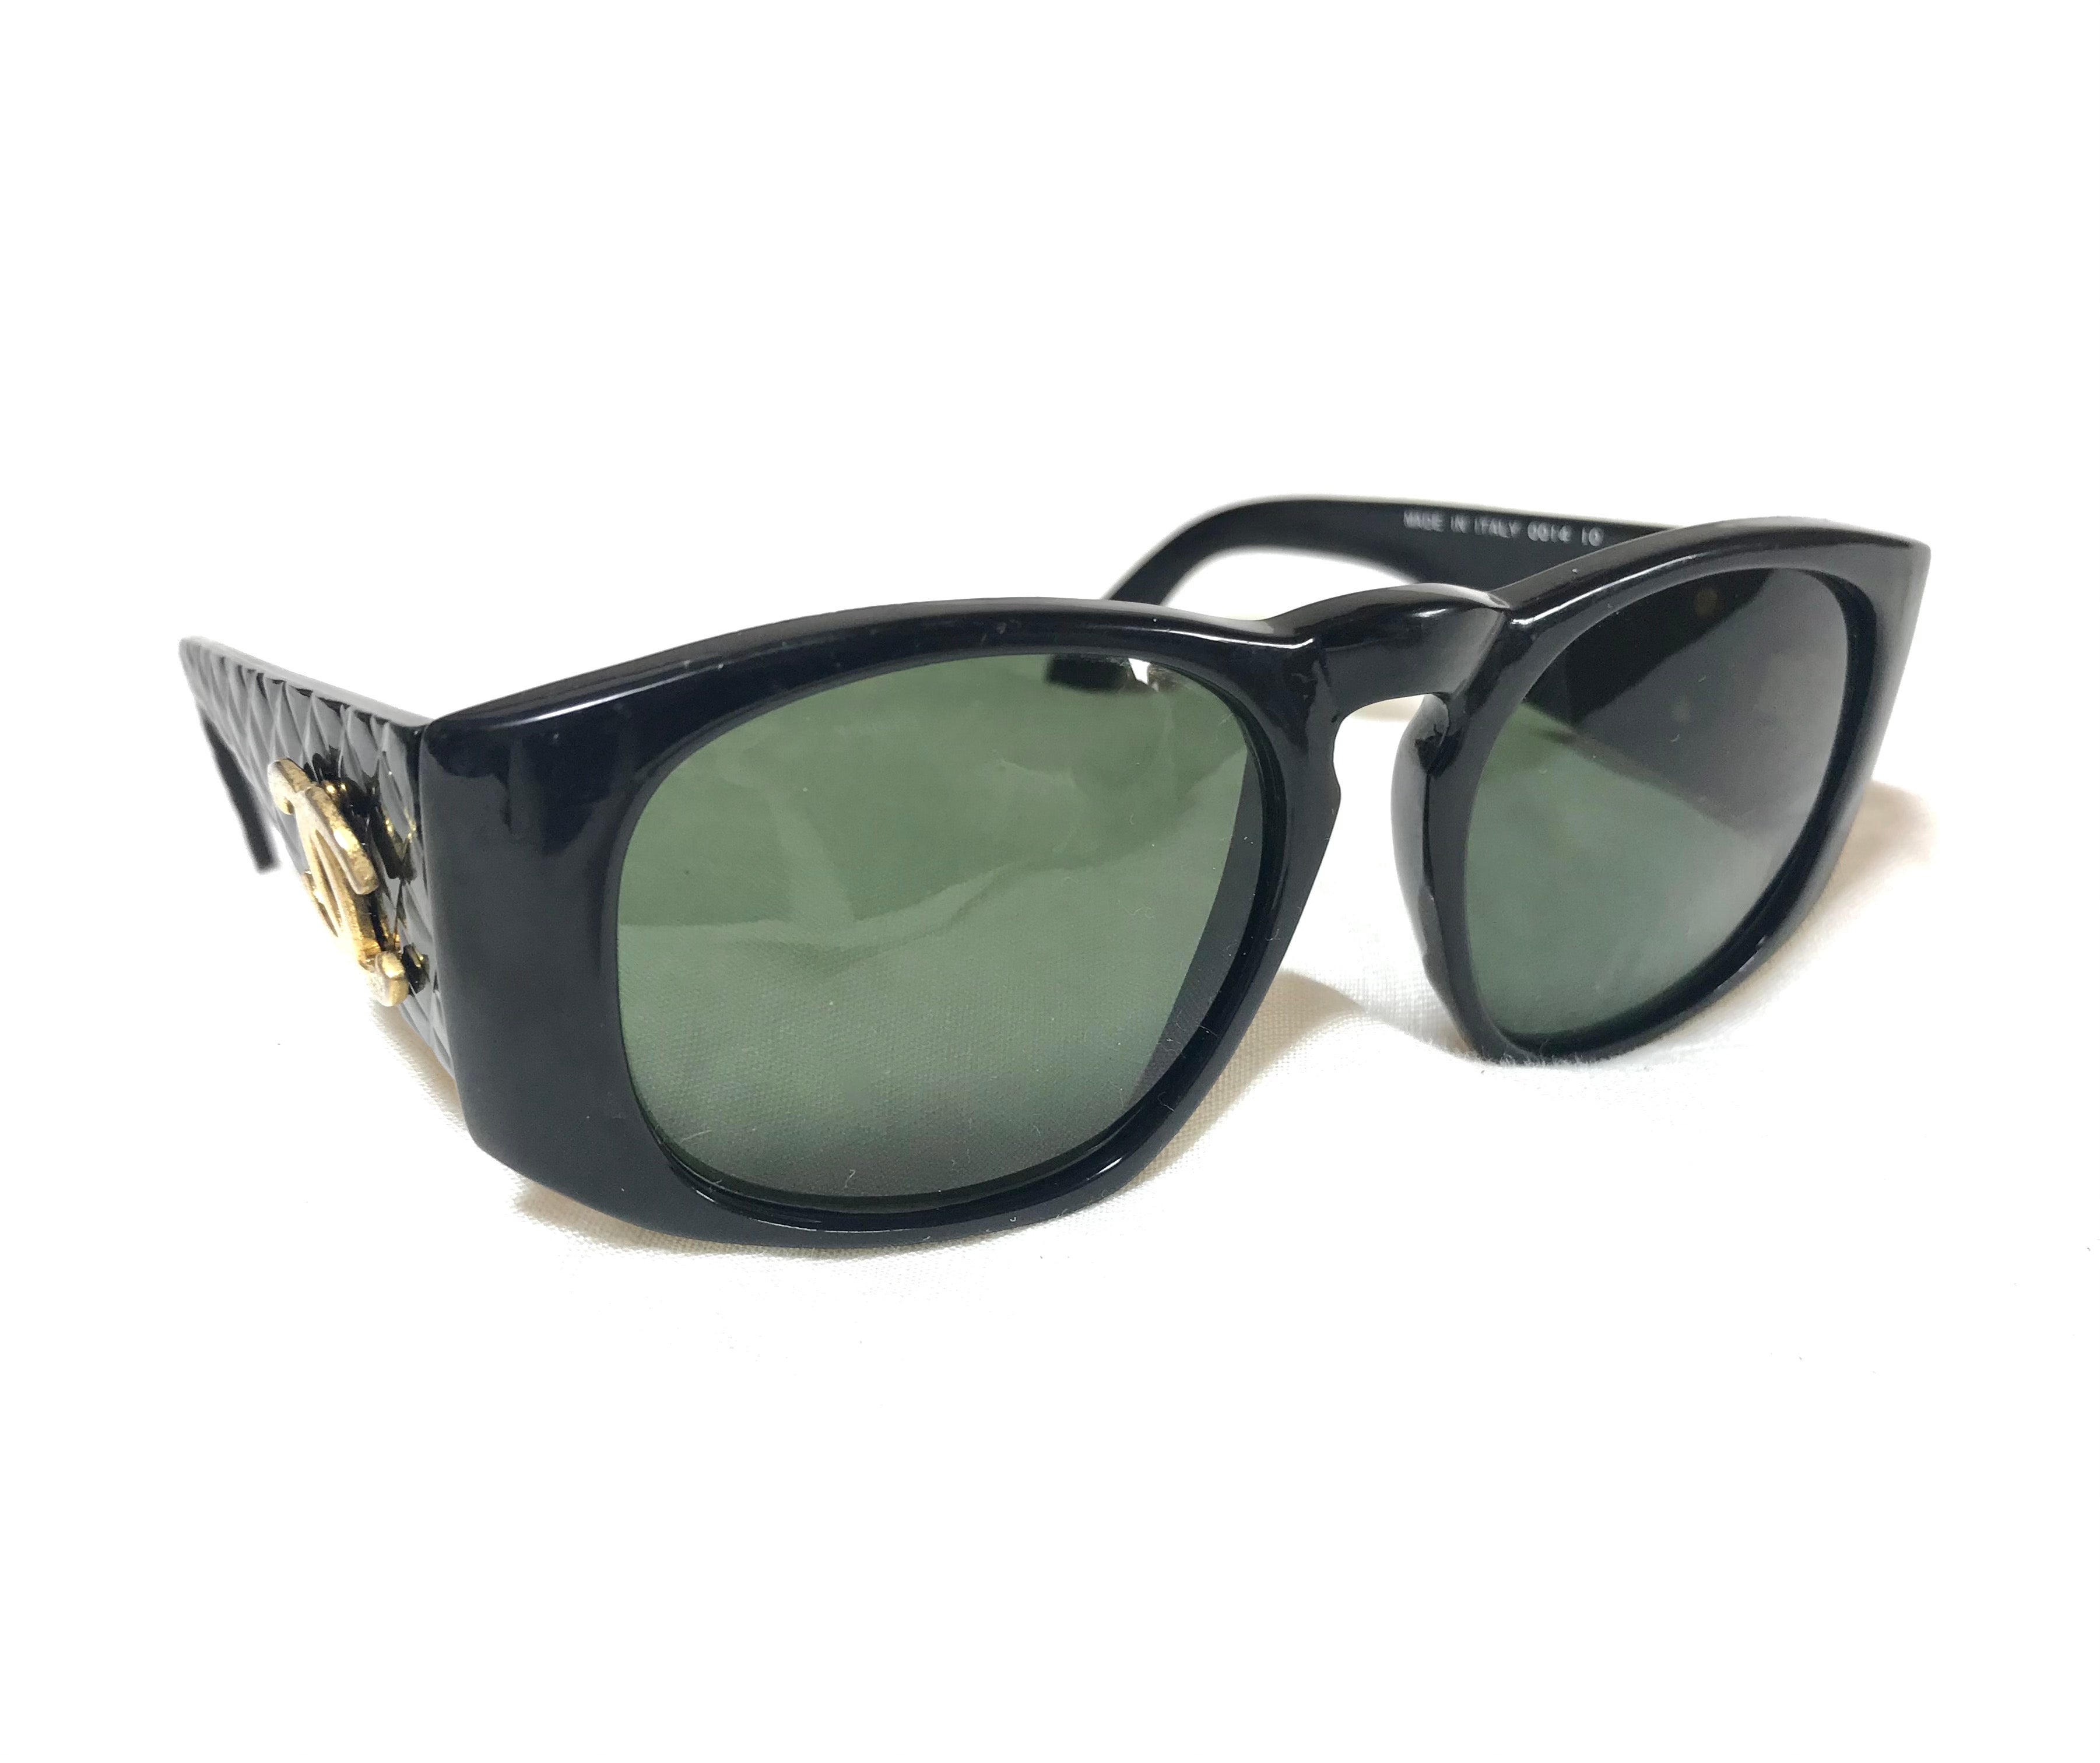 Vintage CHANEL black round frame mod sunglasses with white CHANEL PARIS  logo.